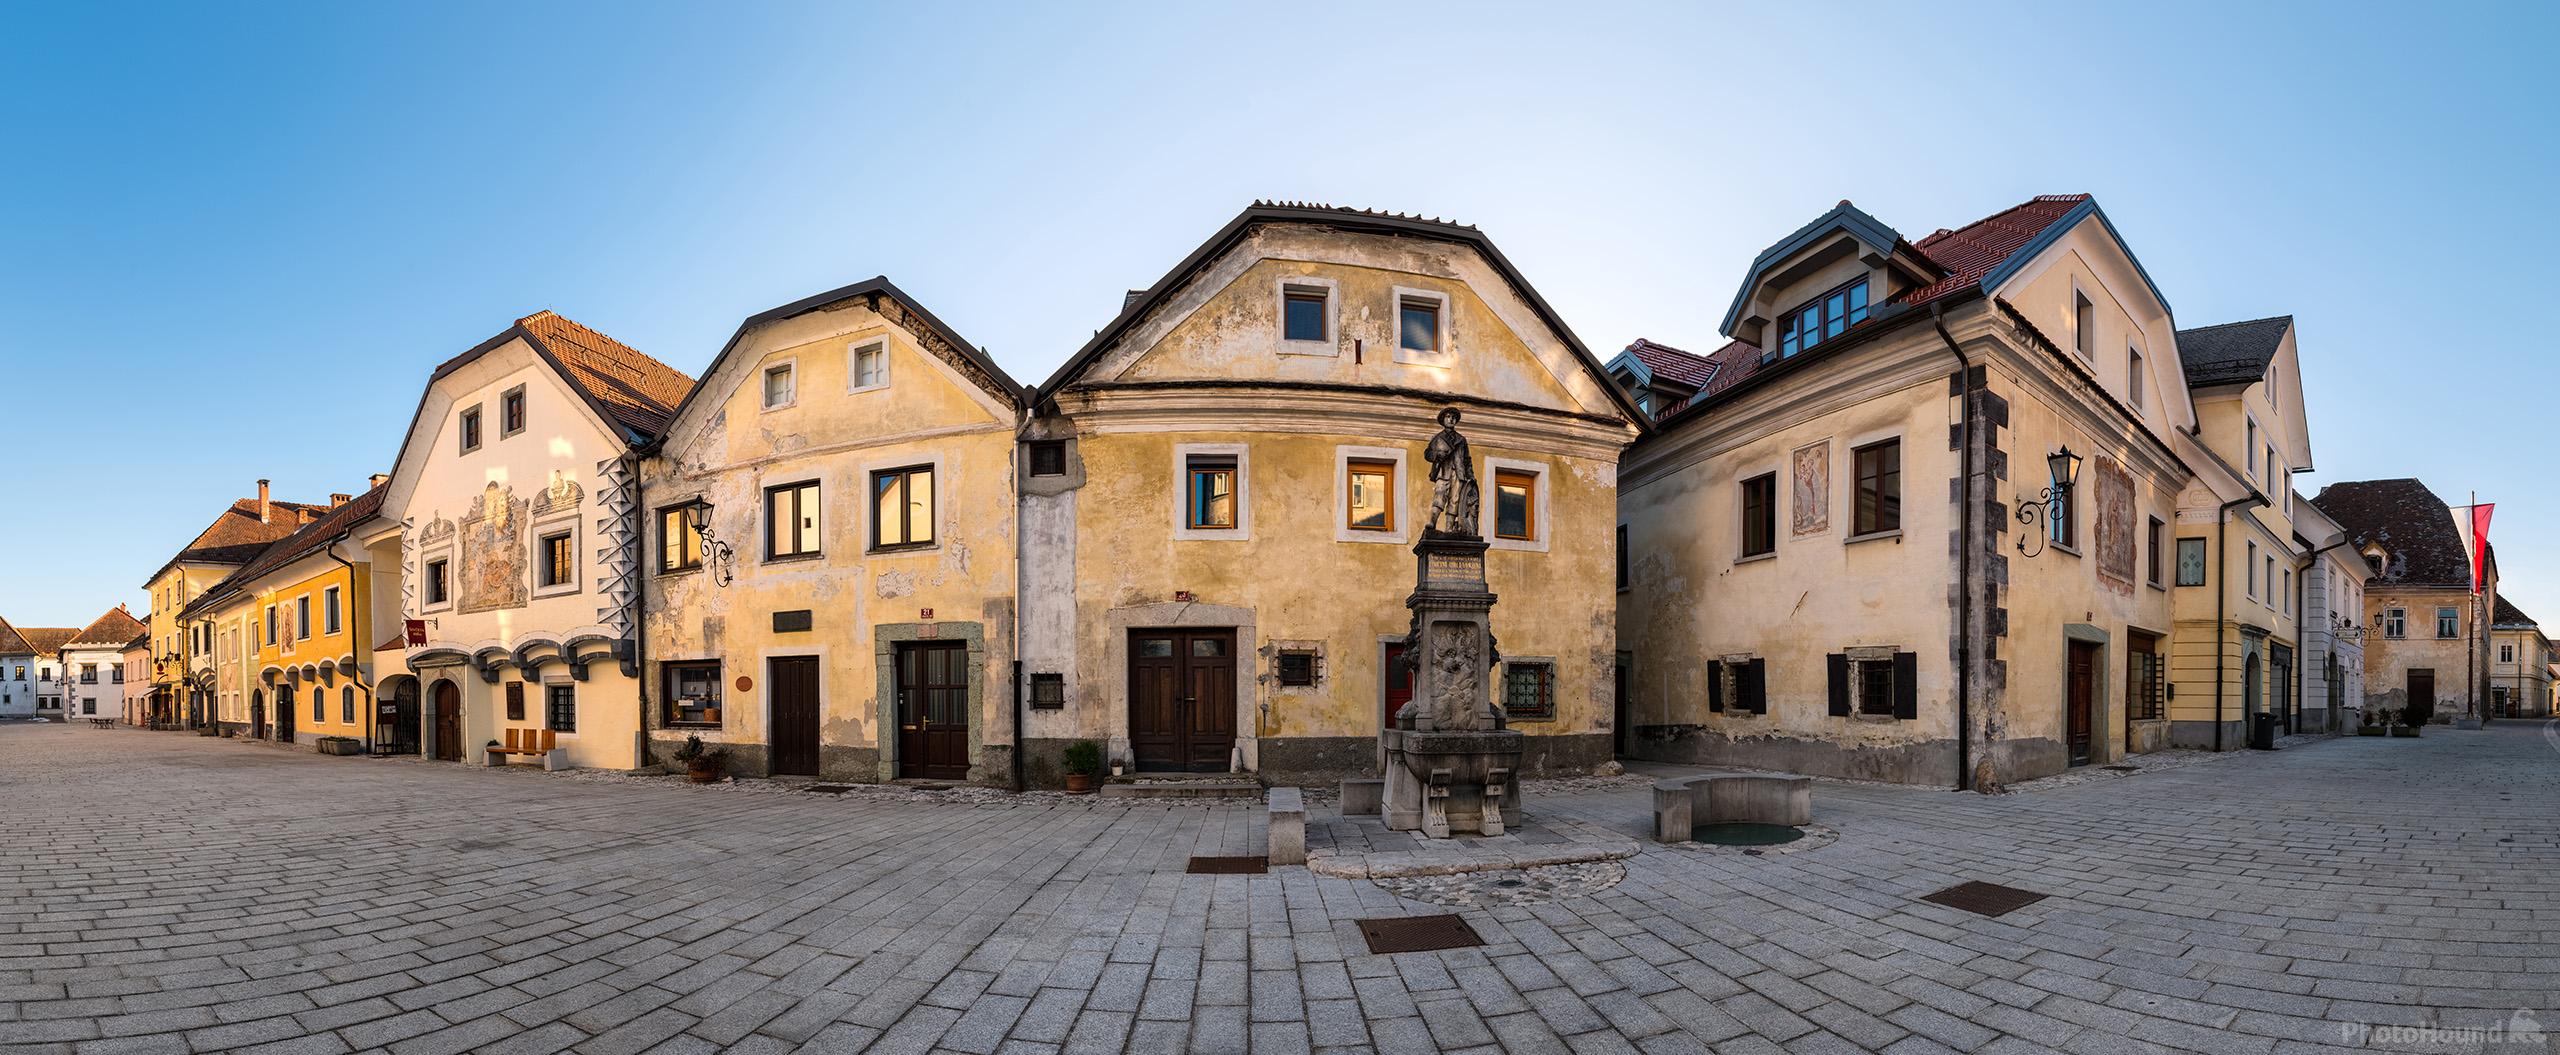 Image of Radovljica Old Town by Luka Esenko